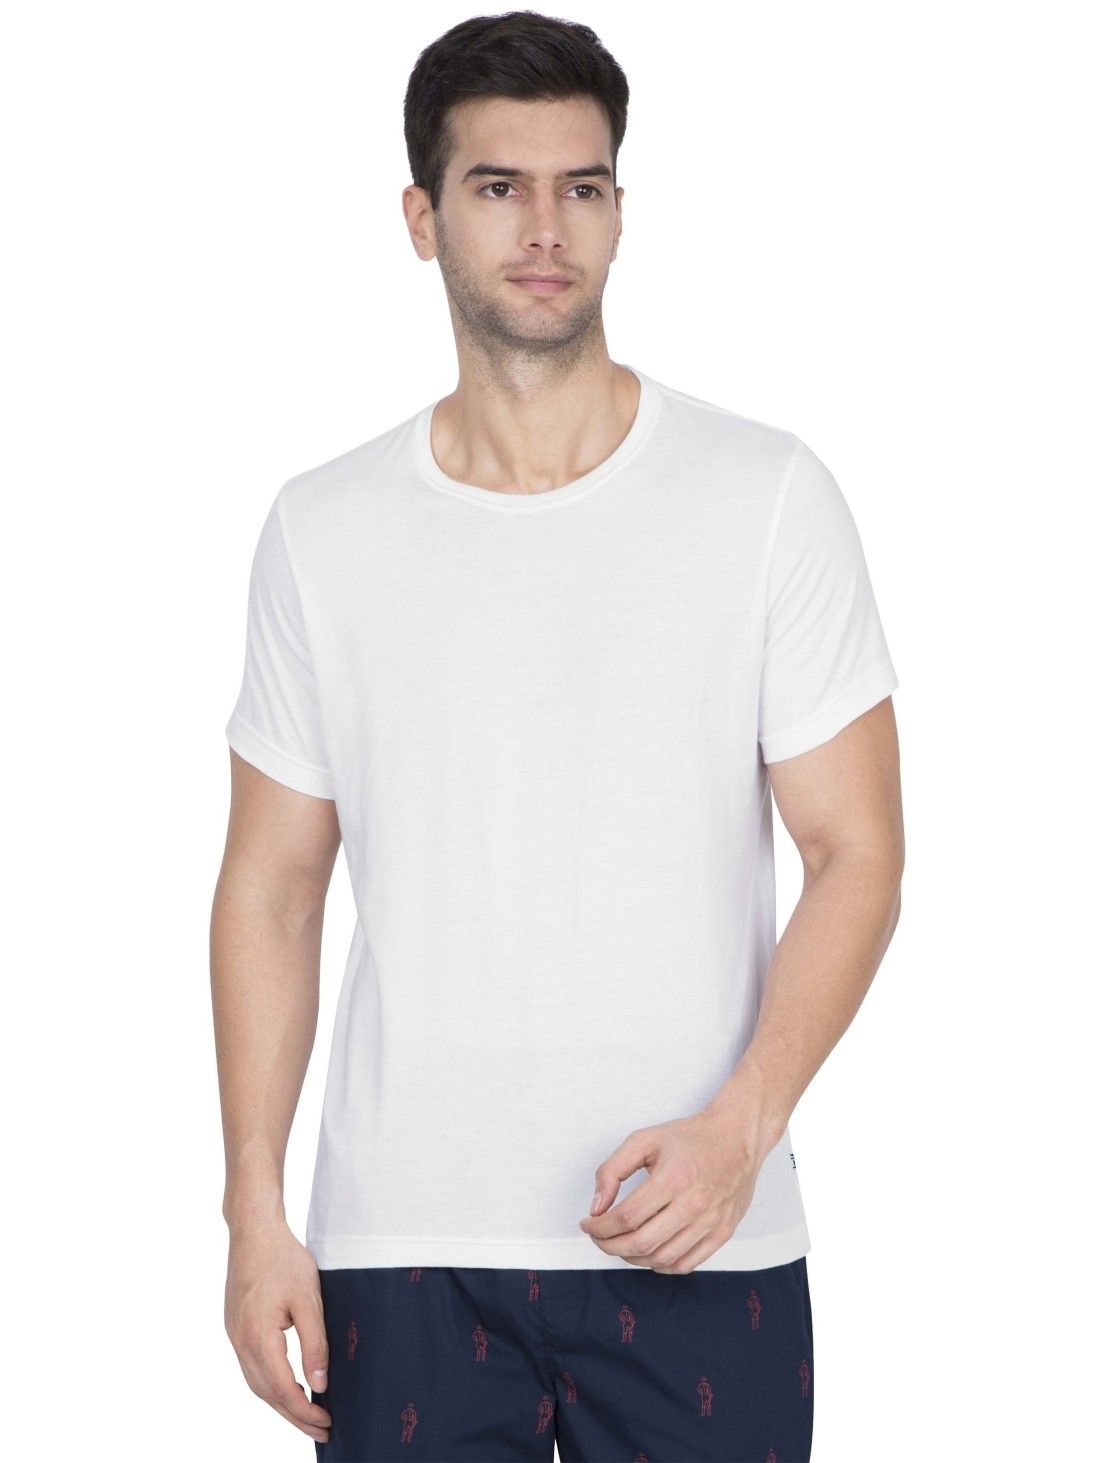 Jockey Man White T-Shirt: Buy Man T-Shirt Online at Best Price India | Nykaa